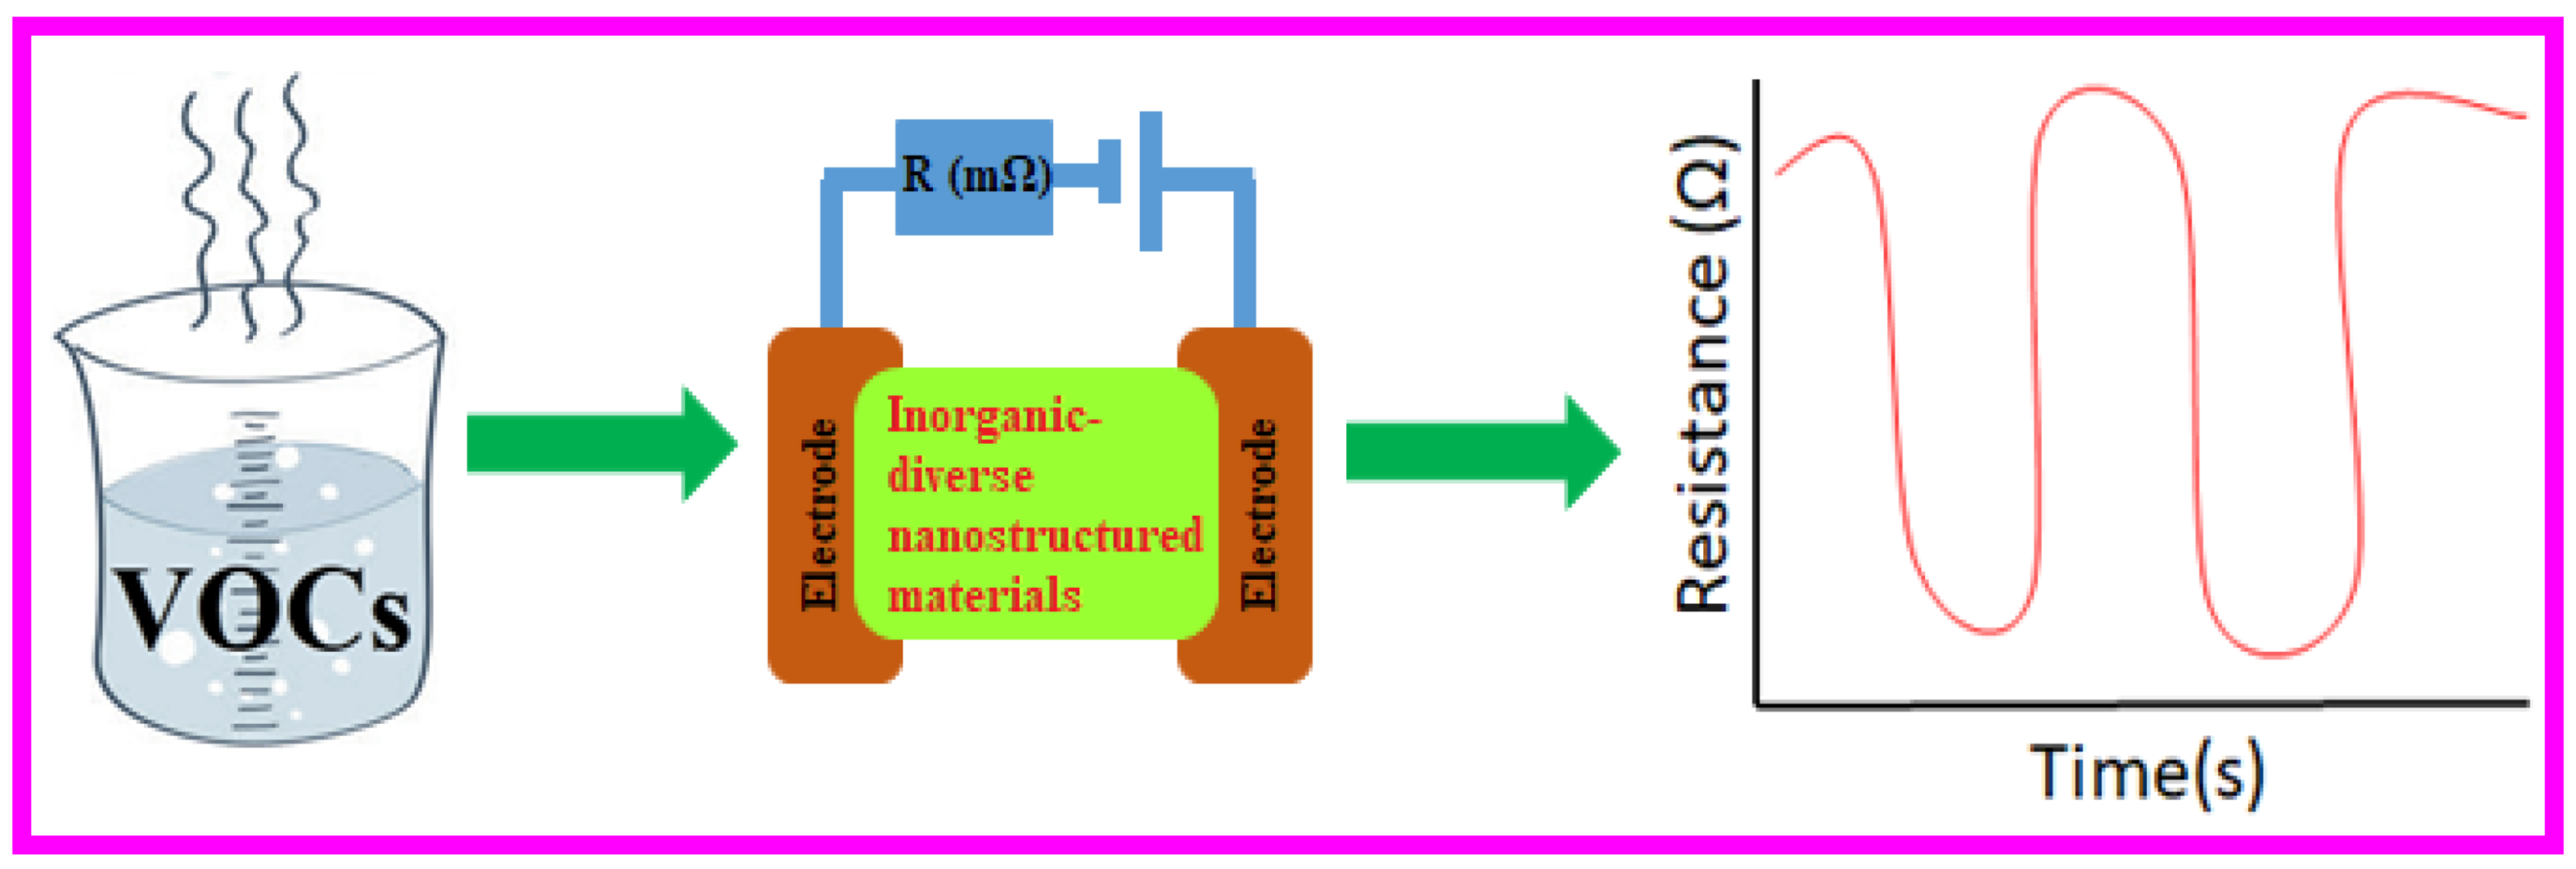 Review of Gravimetric Sensing of Volatile Organic Compounds